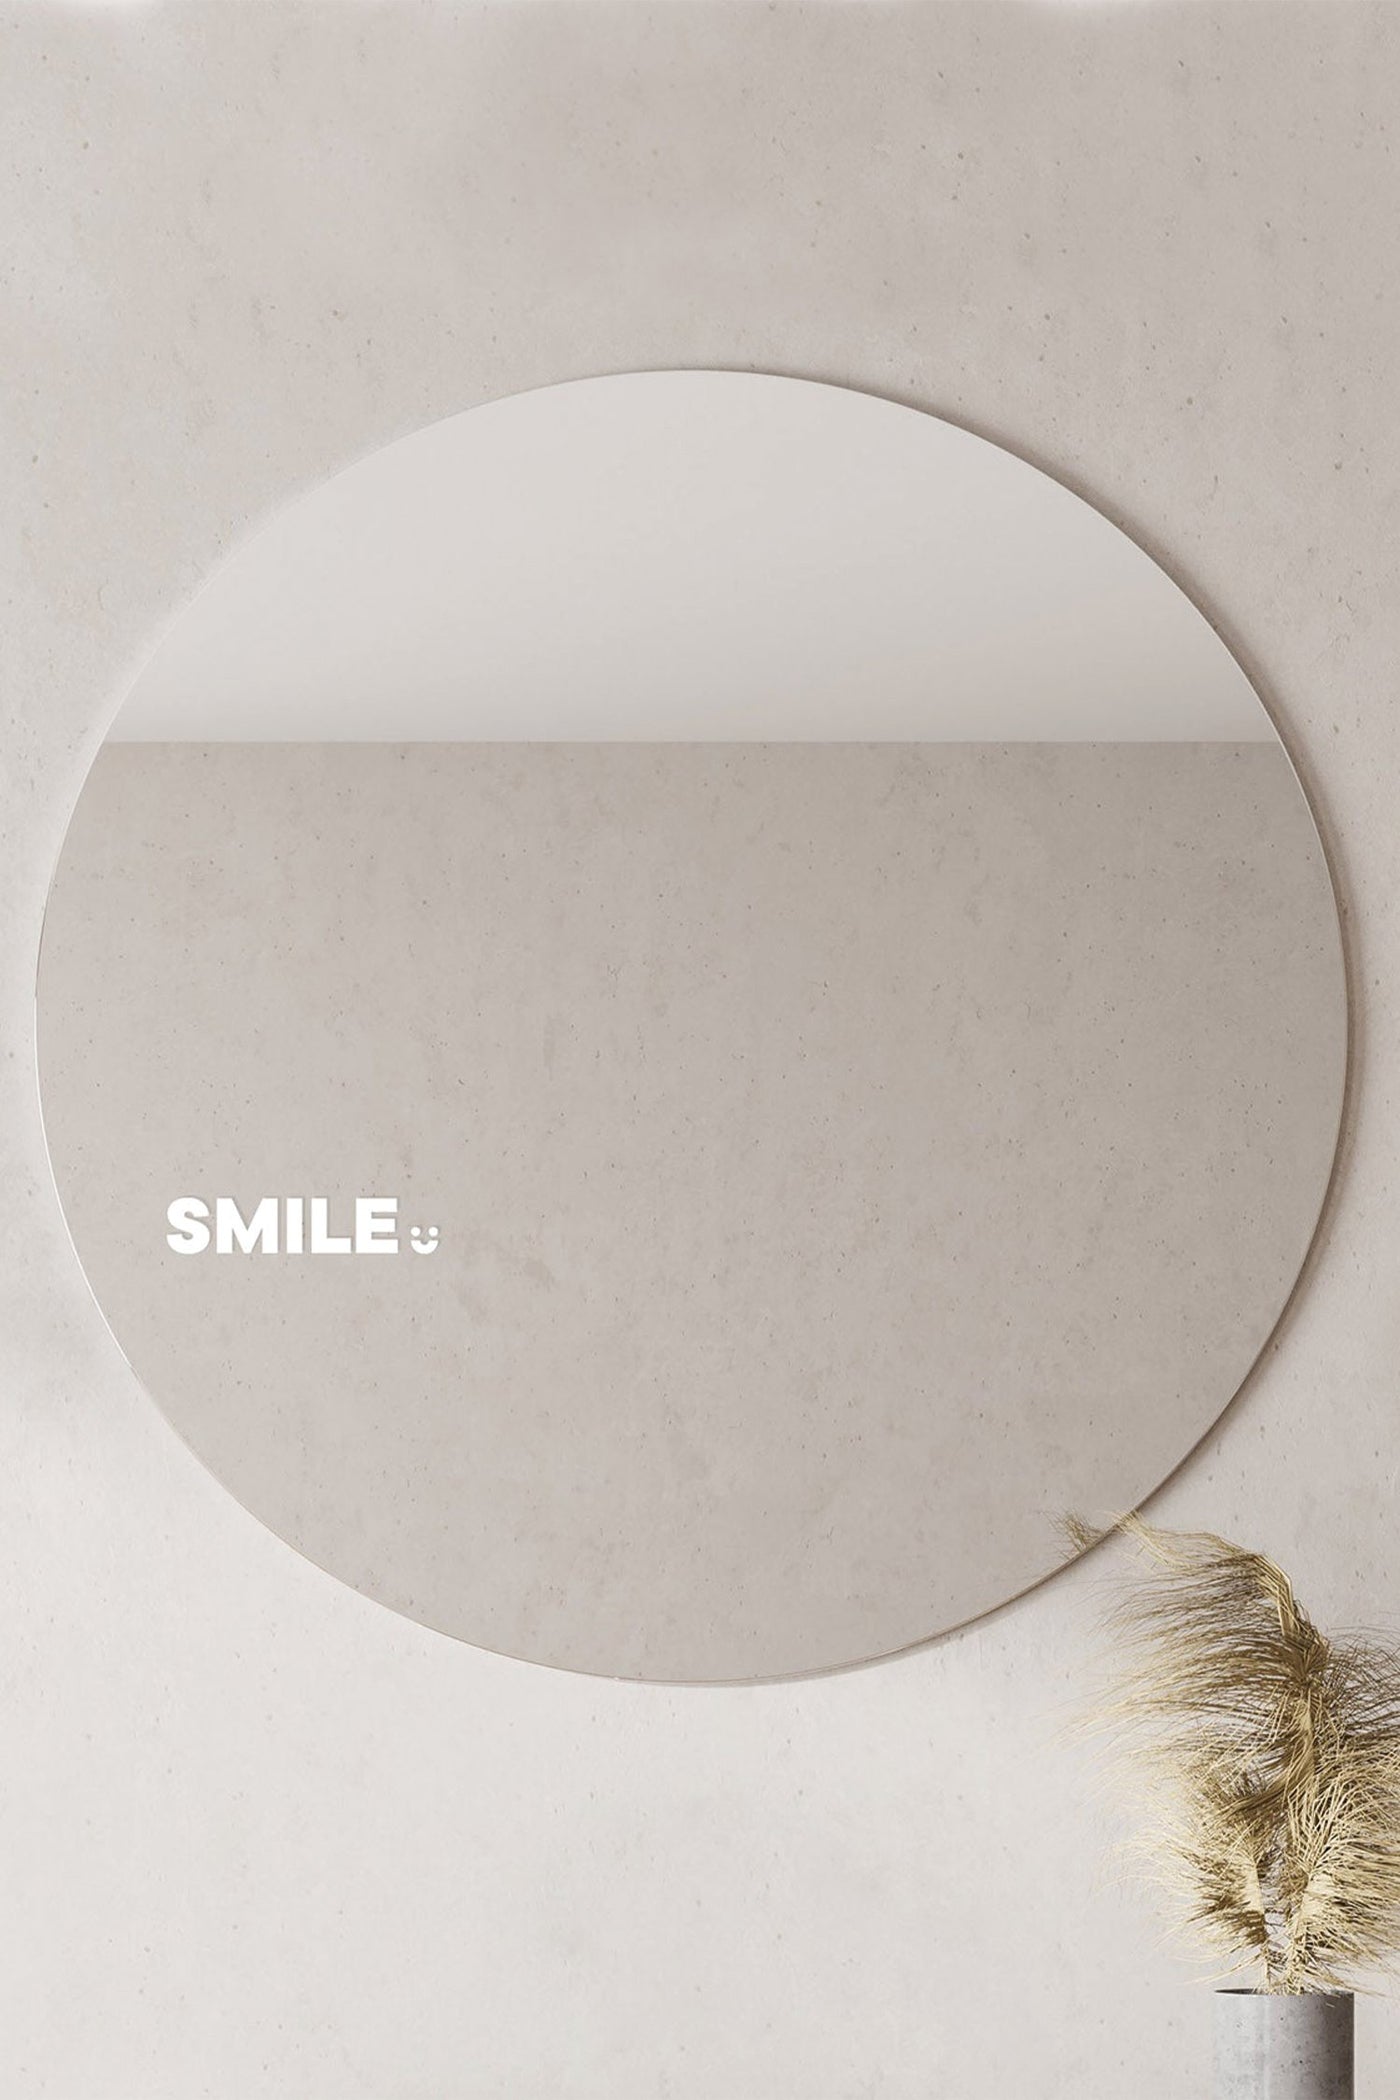 SMILE. - Affirmation Mirror Sticker Affirmation Stickers Selfawear 